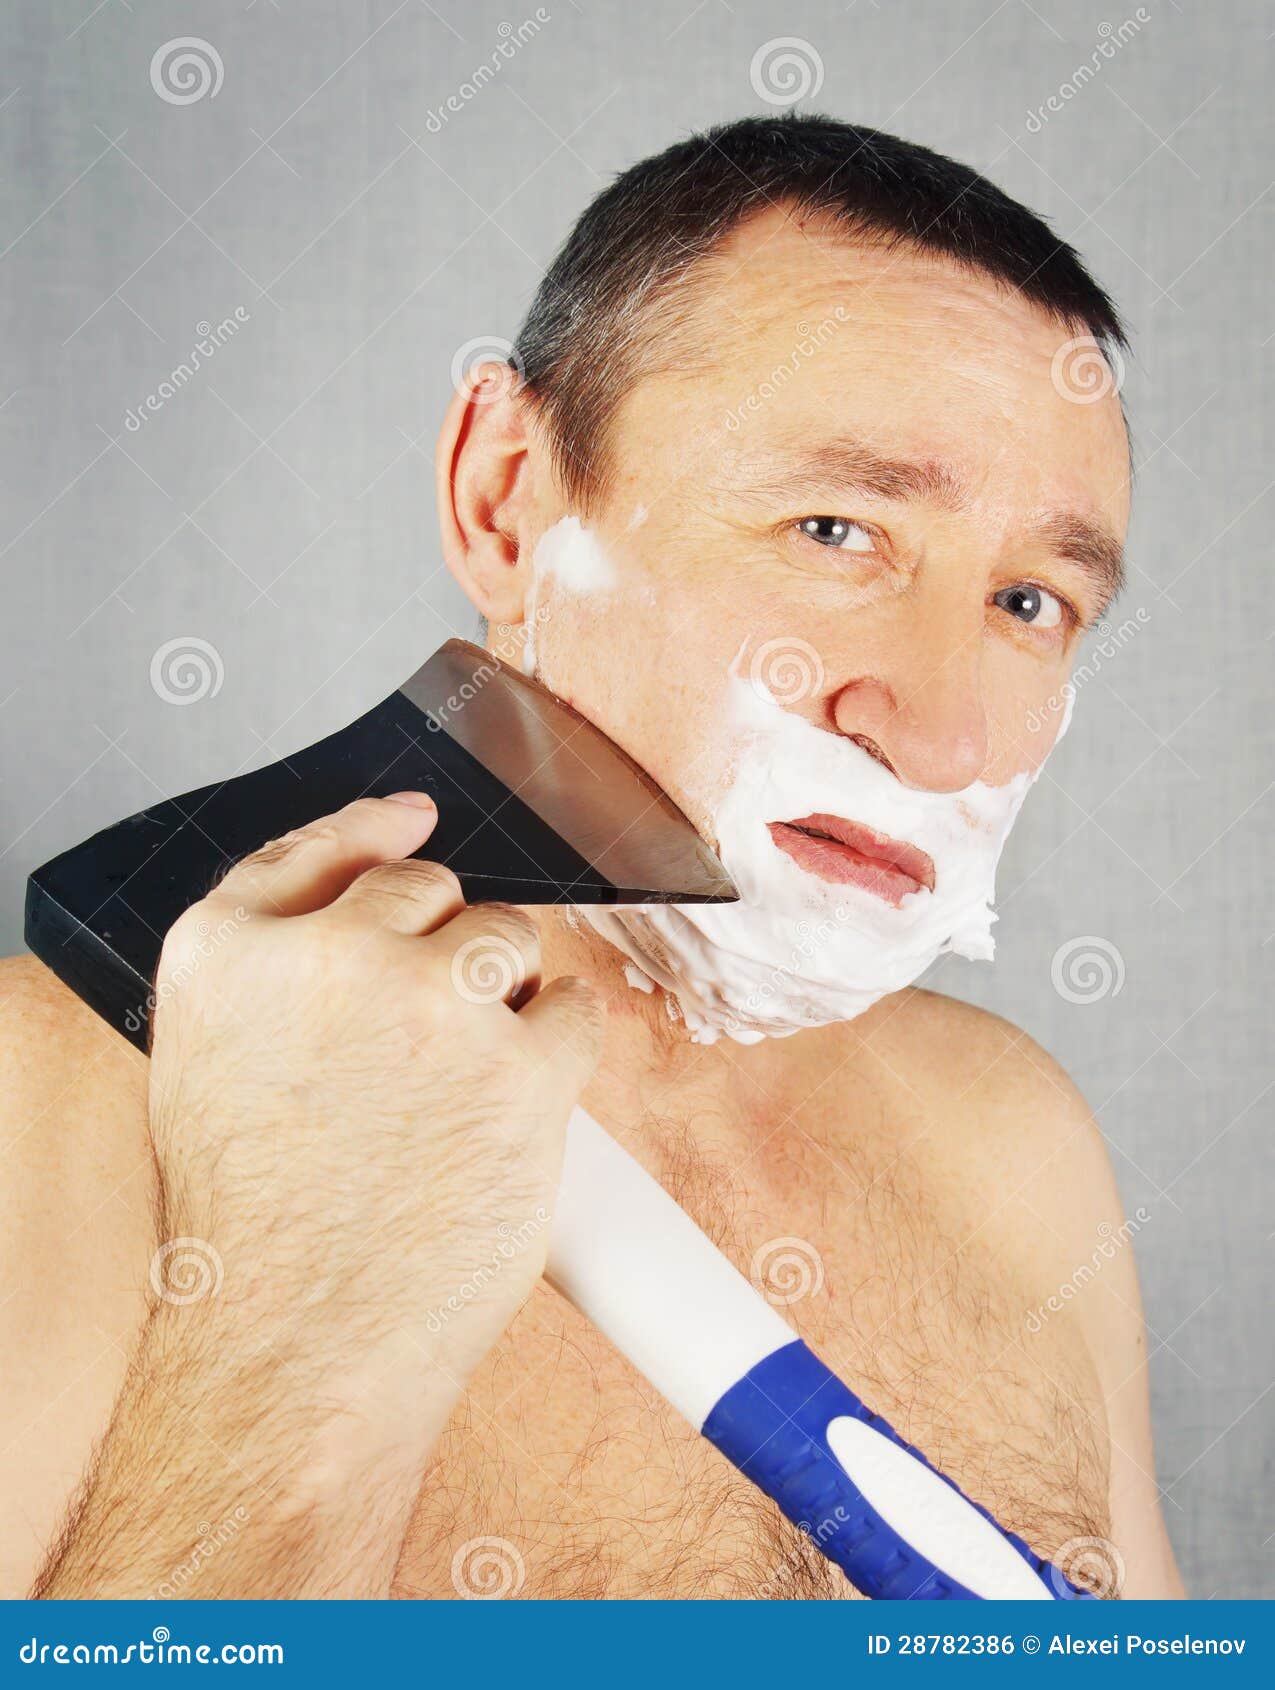 man-shaving-axe-28782386.jpg